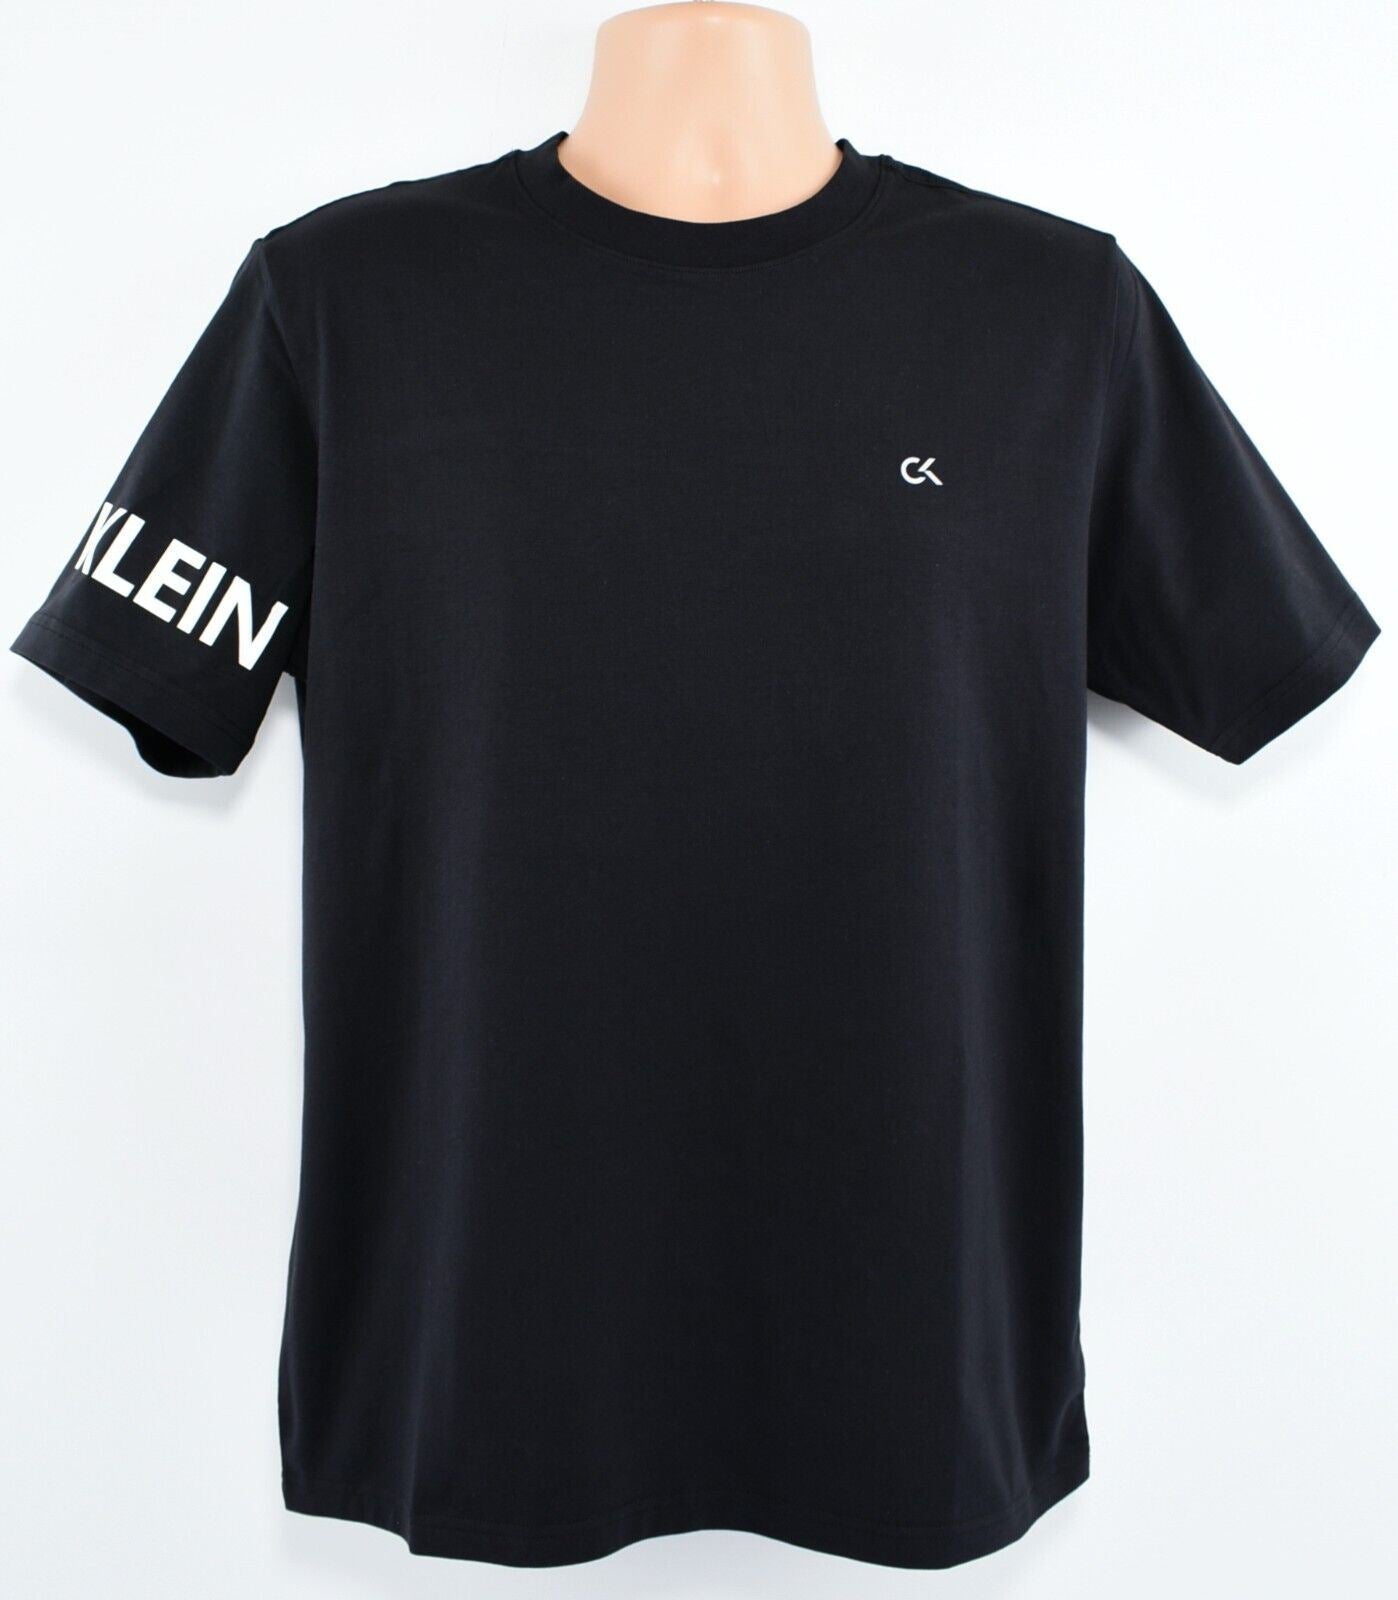 CALVIN KLEIN Performance: Men's Crew Neck Cotton T-shirt, Black, size M